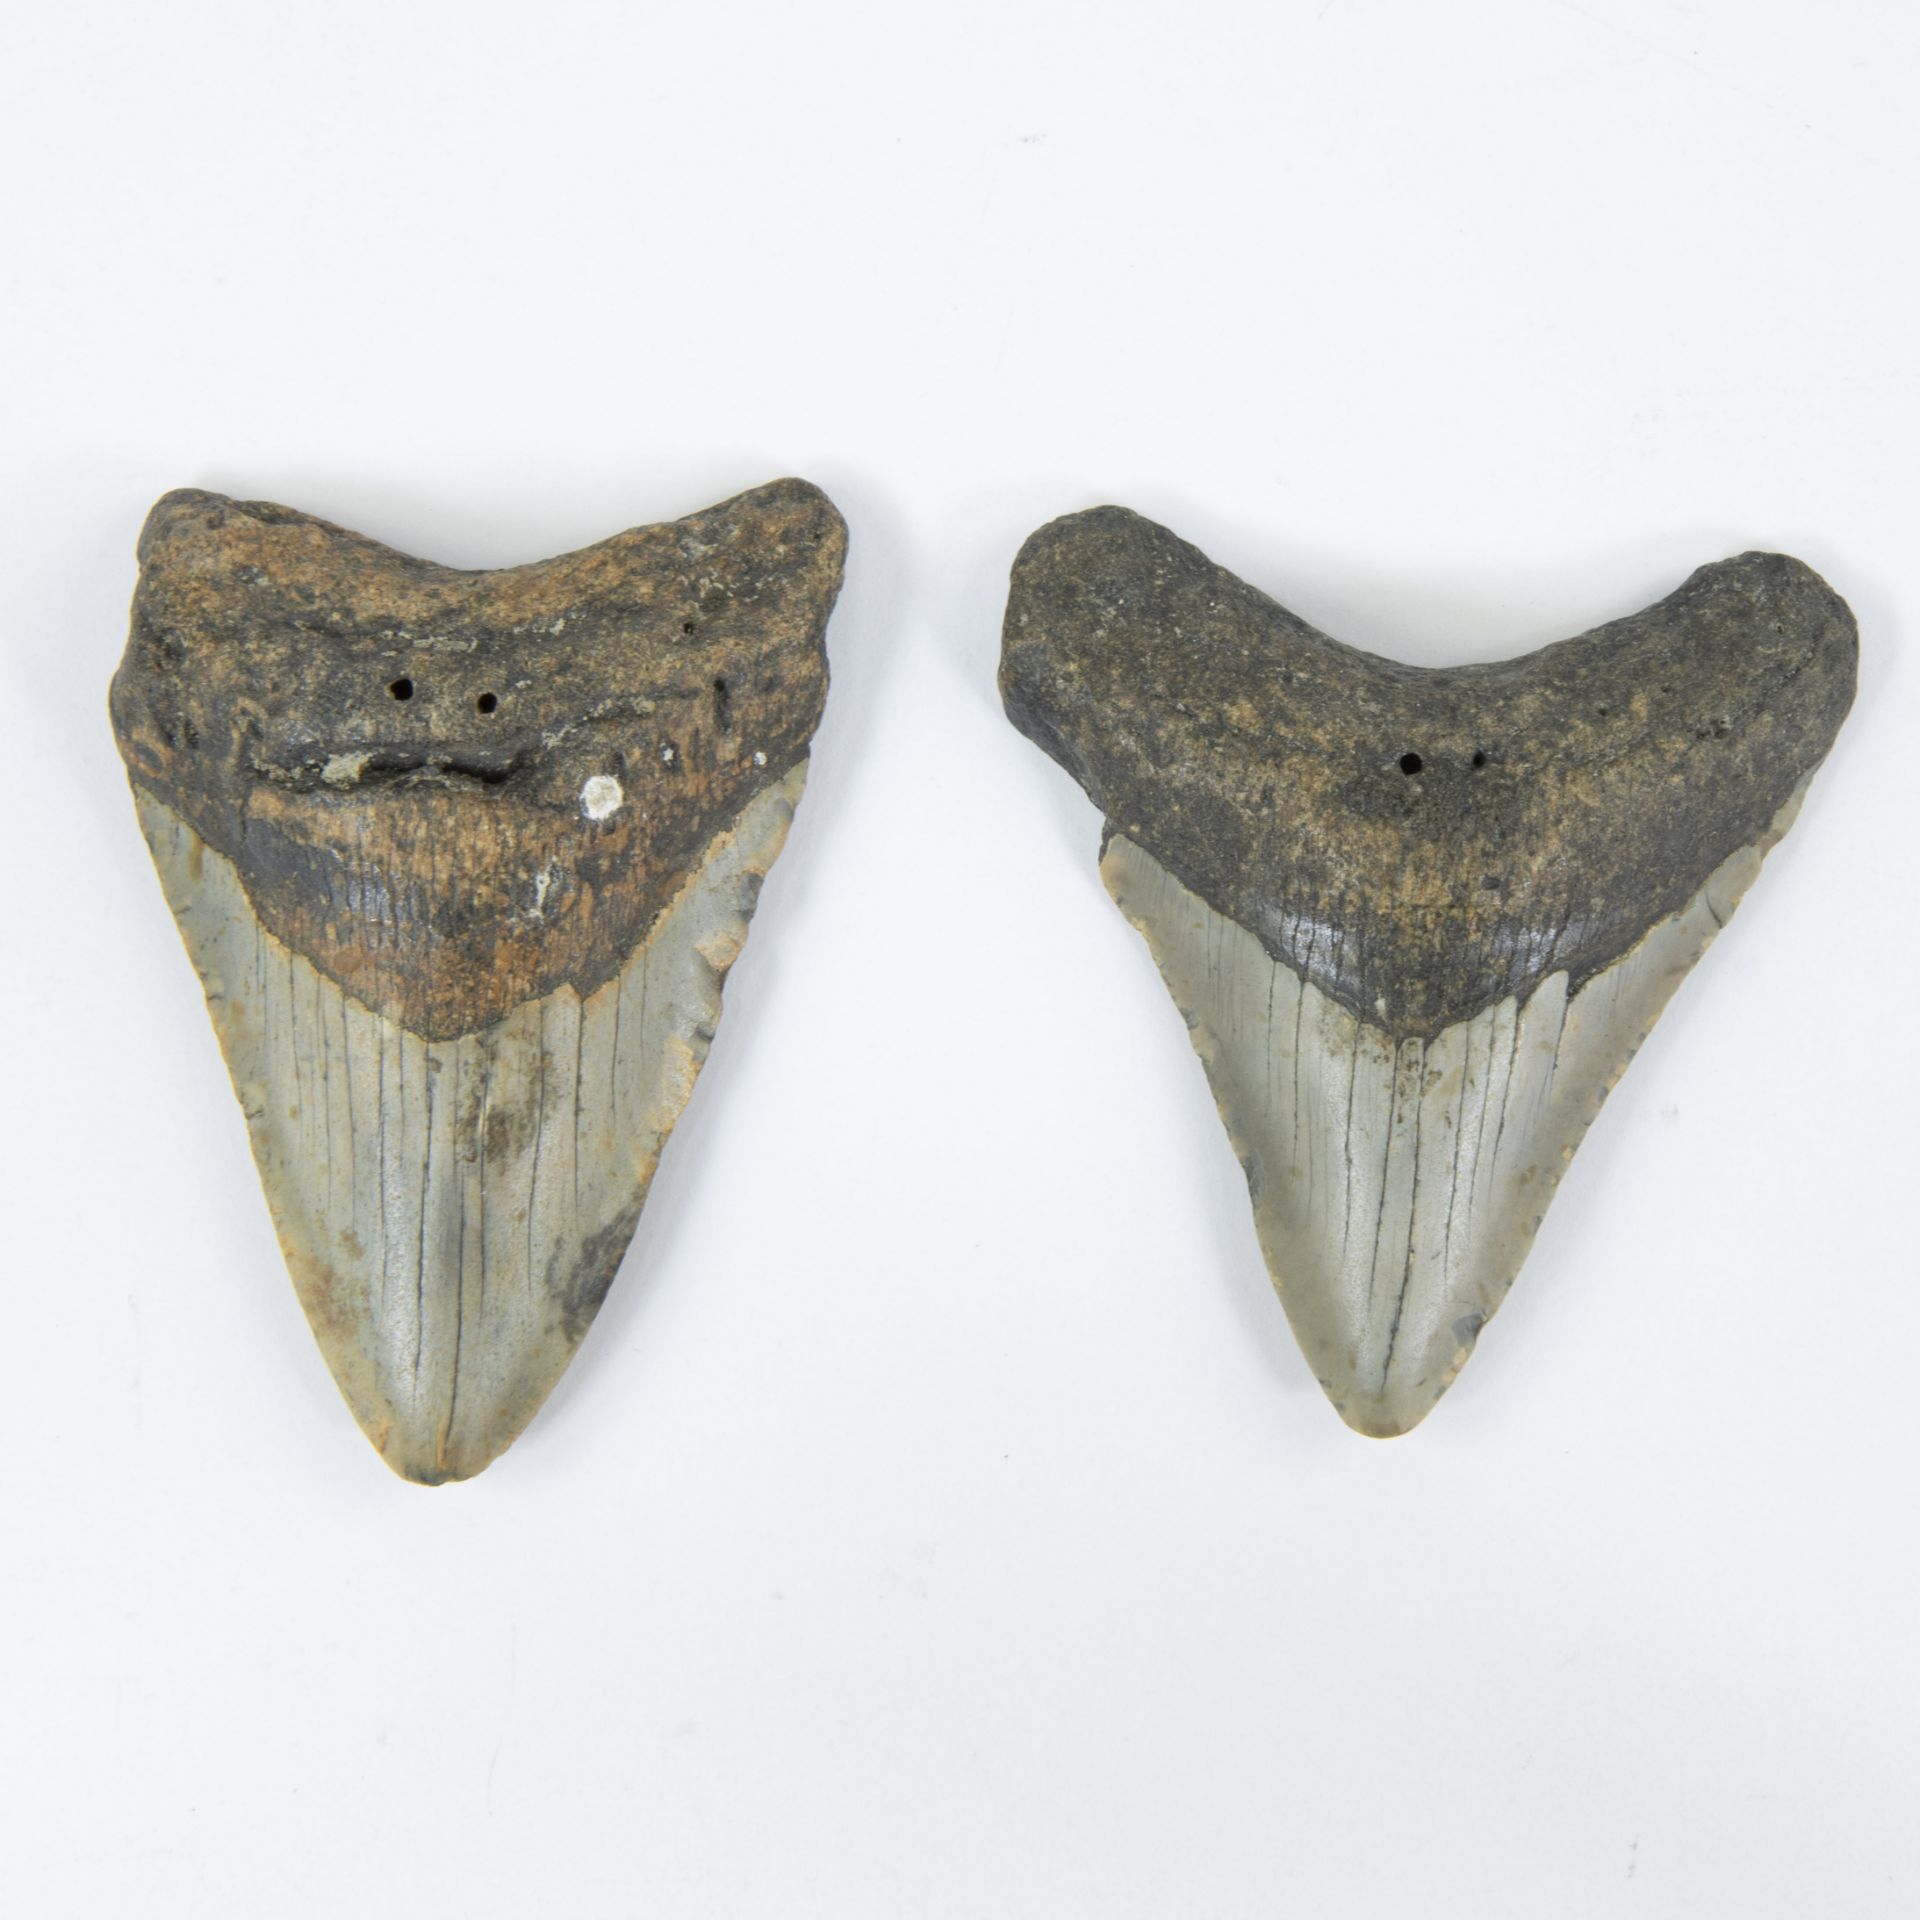 2 shark teeth from Kieldrecht - Kallo during deepening of Berendrecht dock